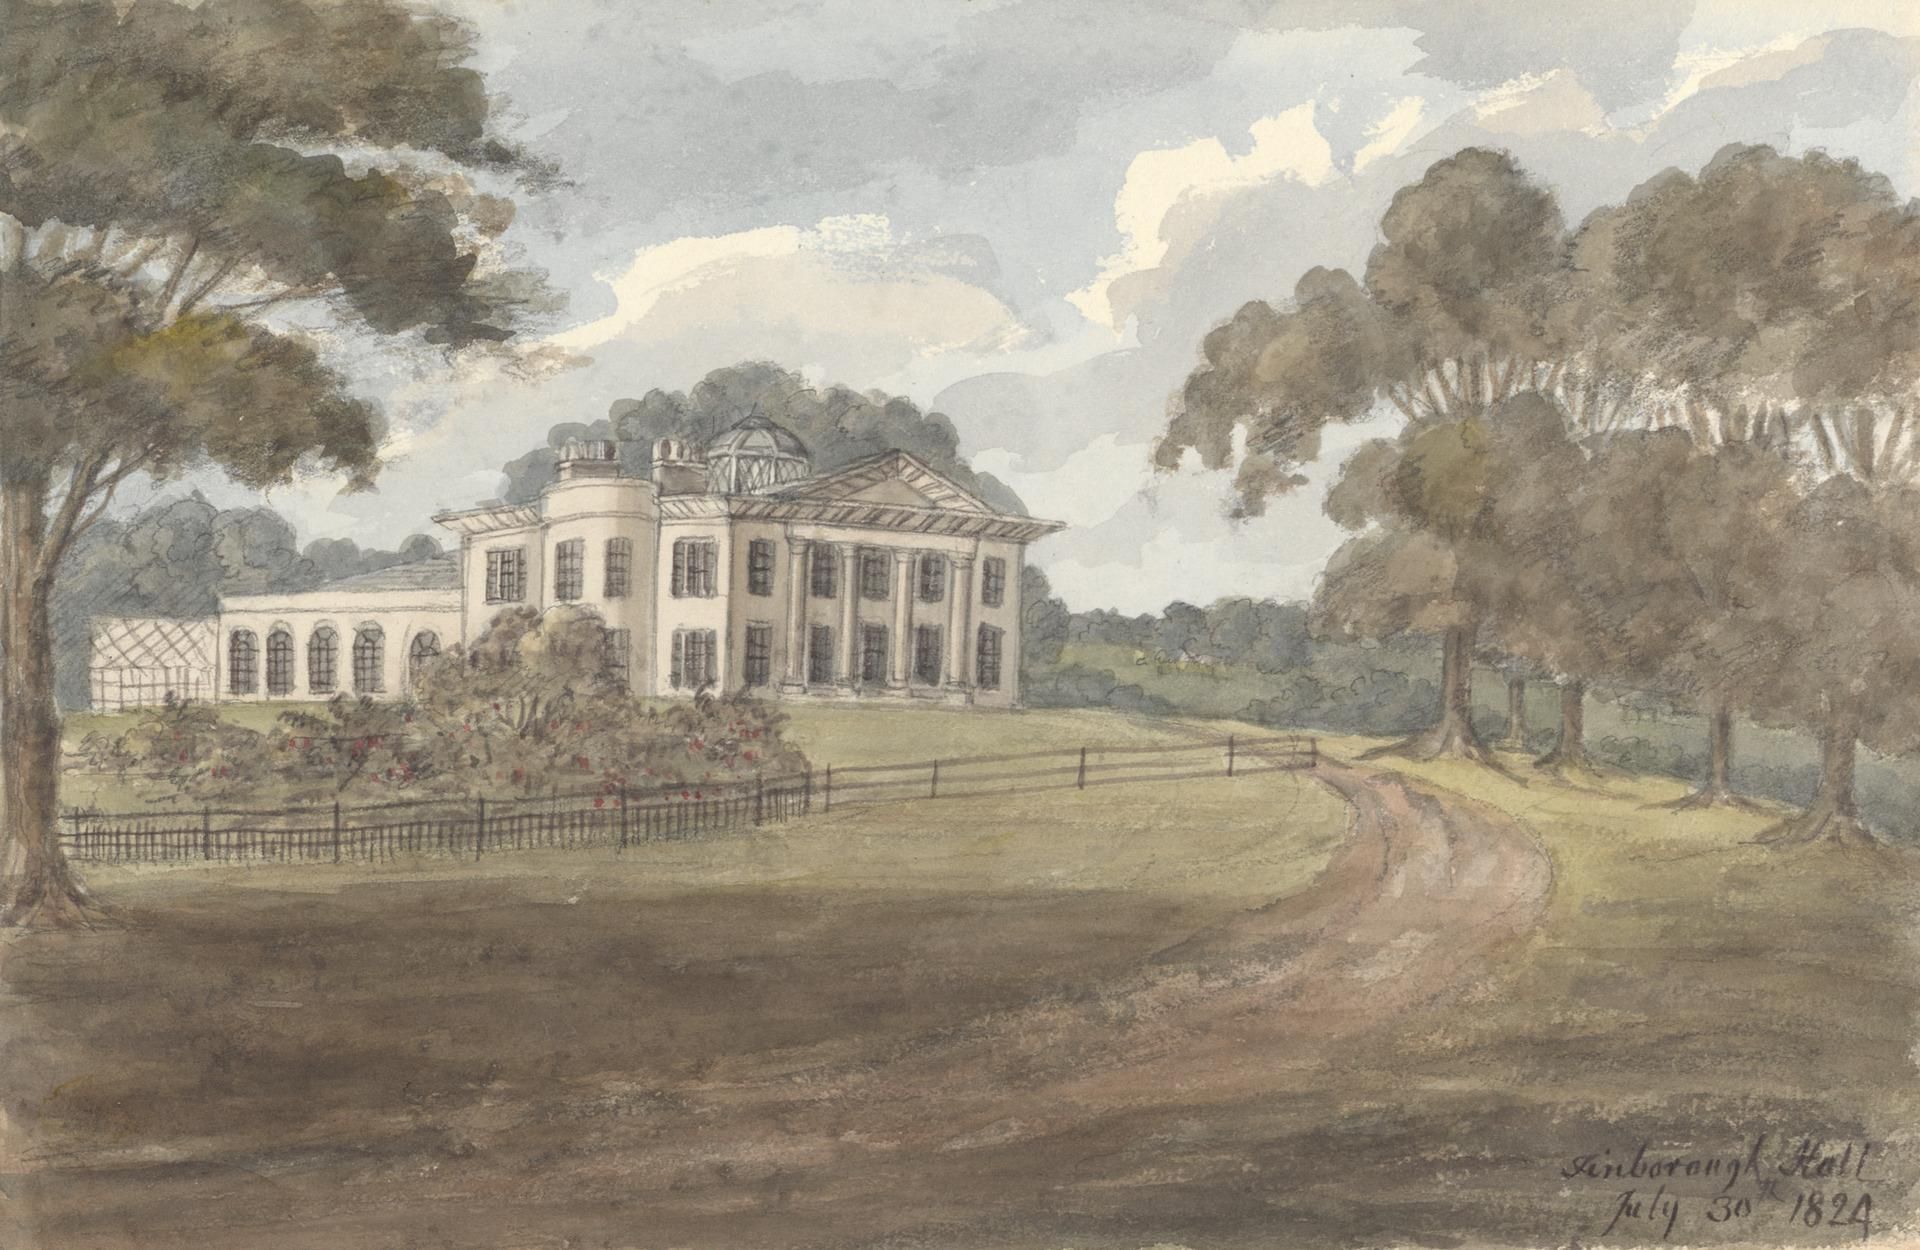 Finborough Hall, July 30, 1824